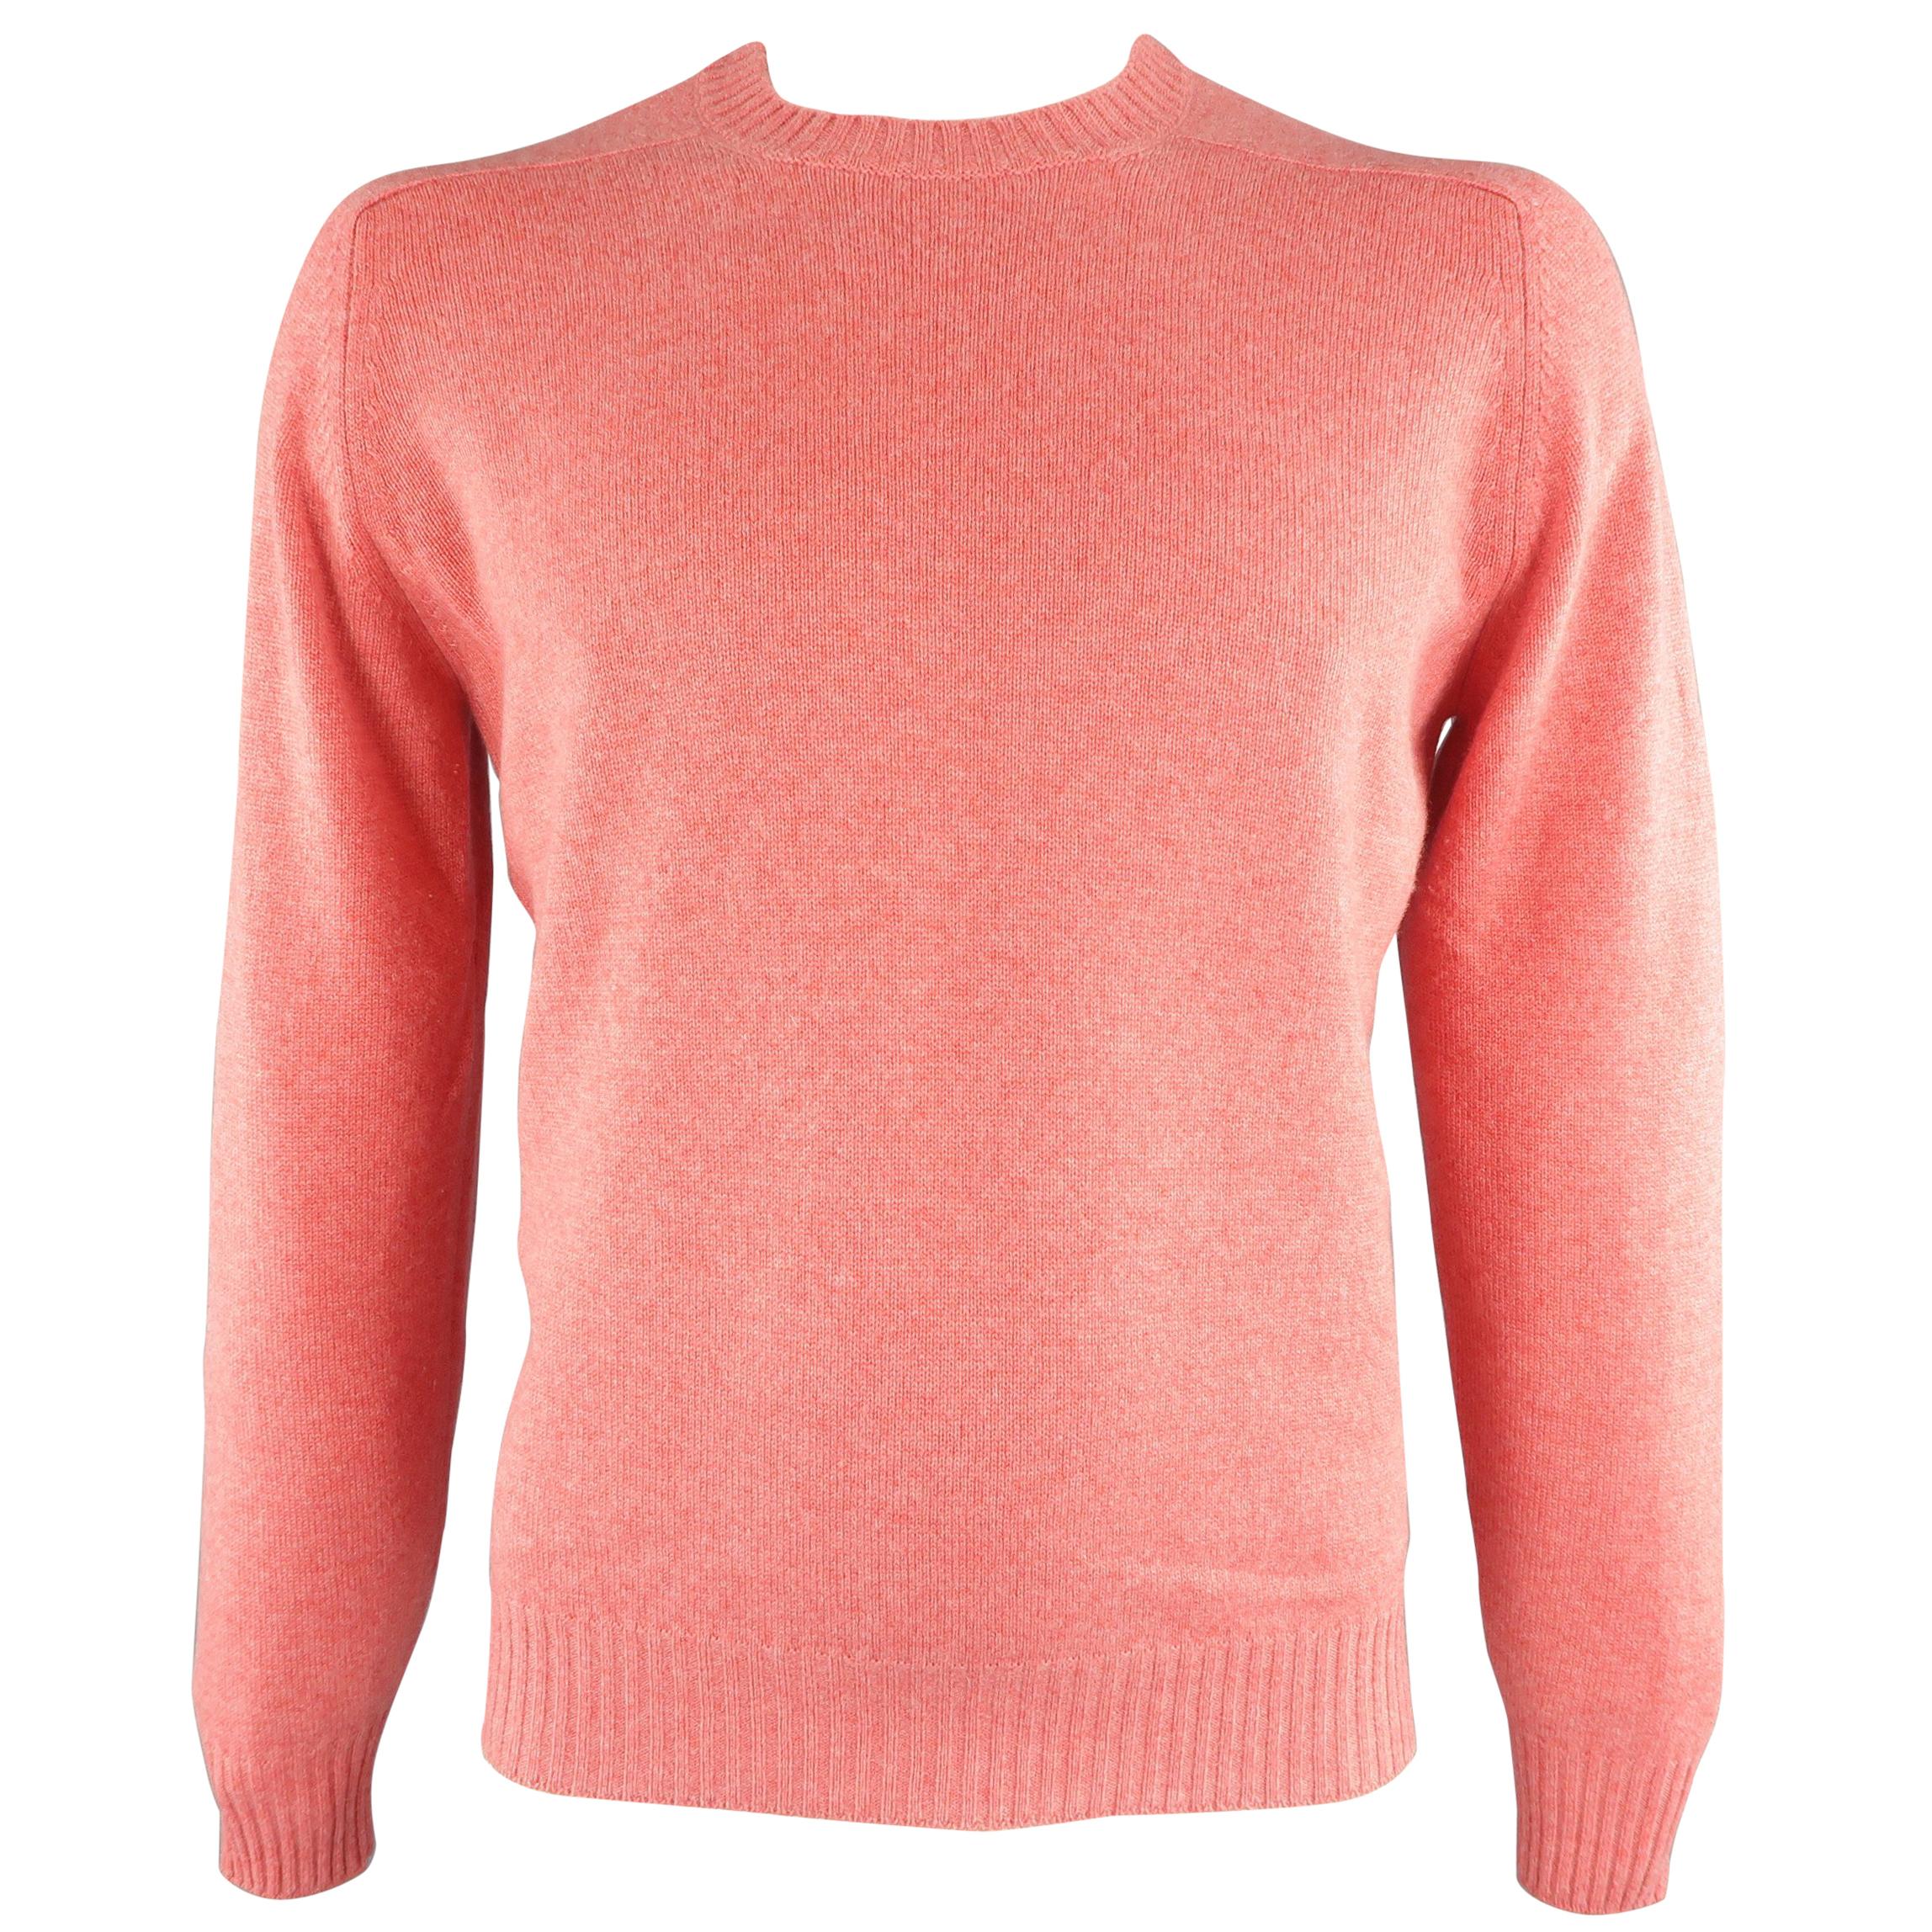 BRUNELLO CUCINELLI Size 42 Salmon Knitted Cashmere Sweater